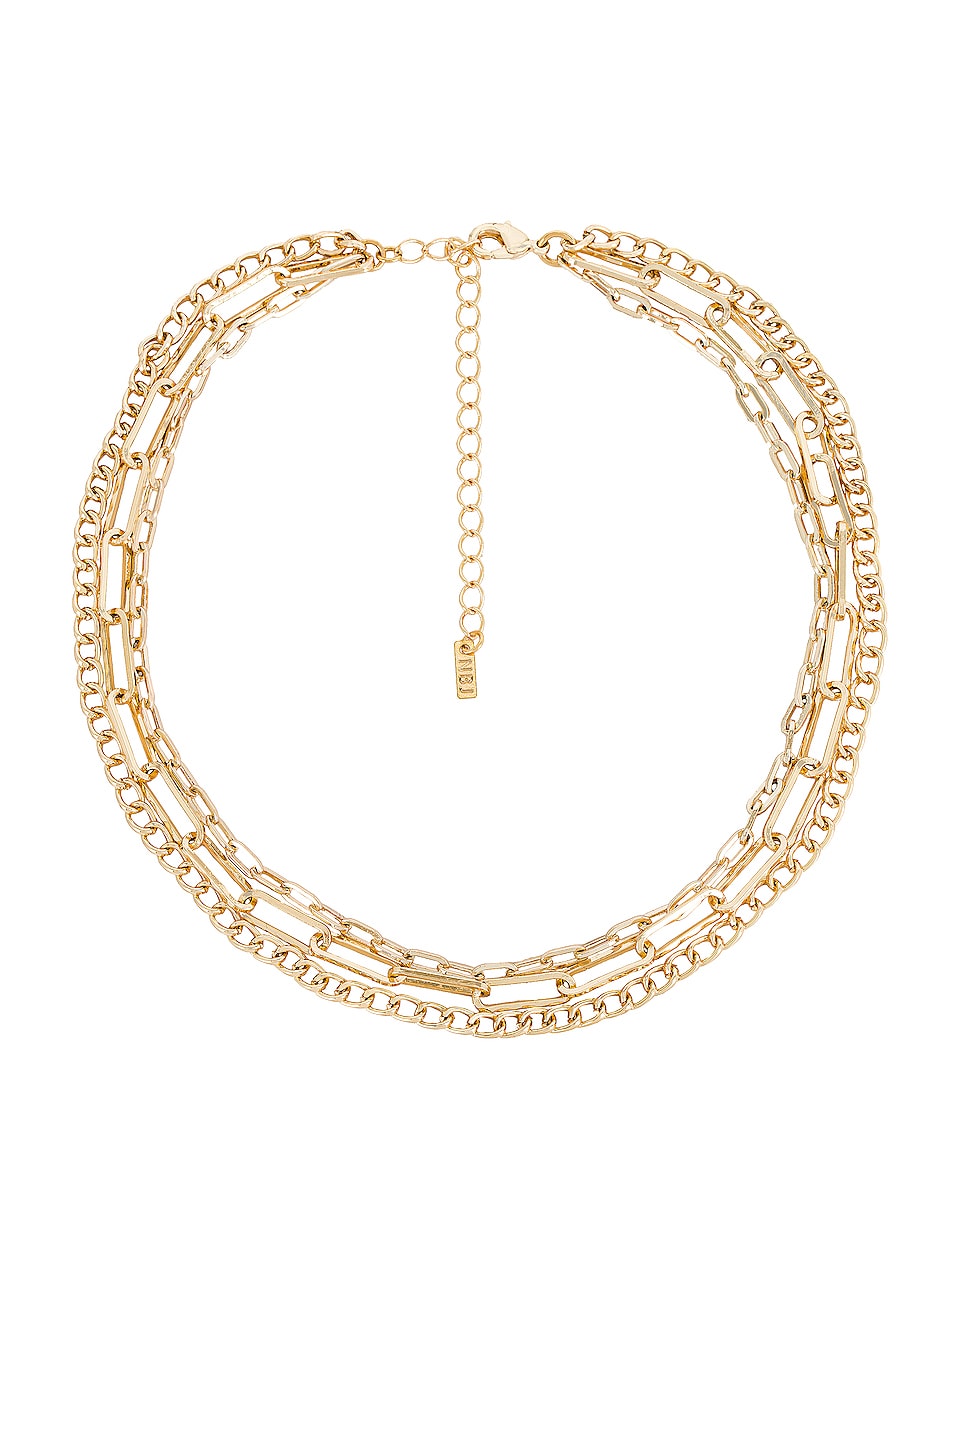 Natalie B Jewelry Ayala Necklace Set in Gold | REVOLVE